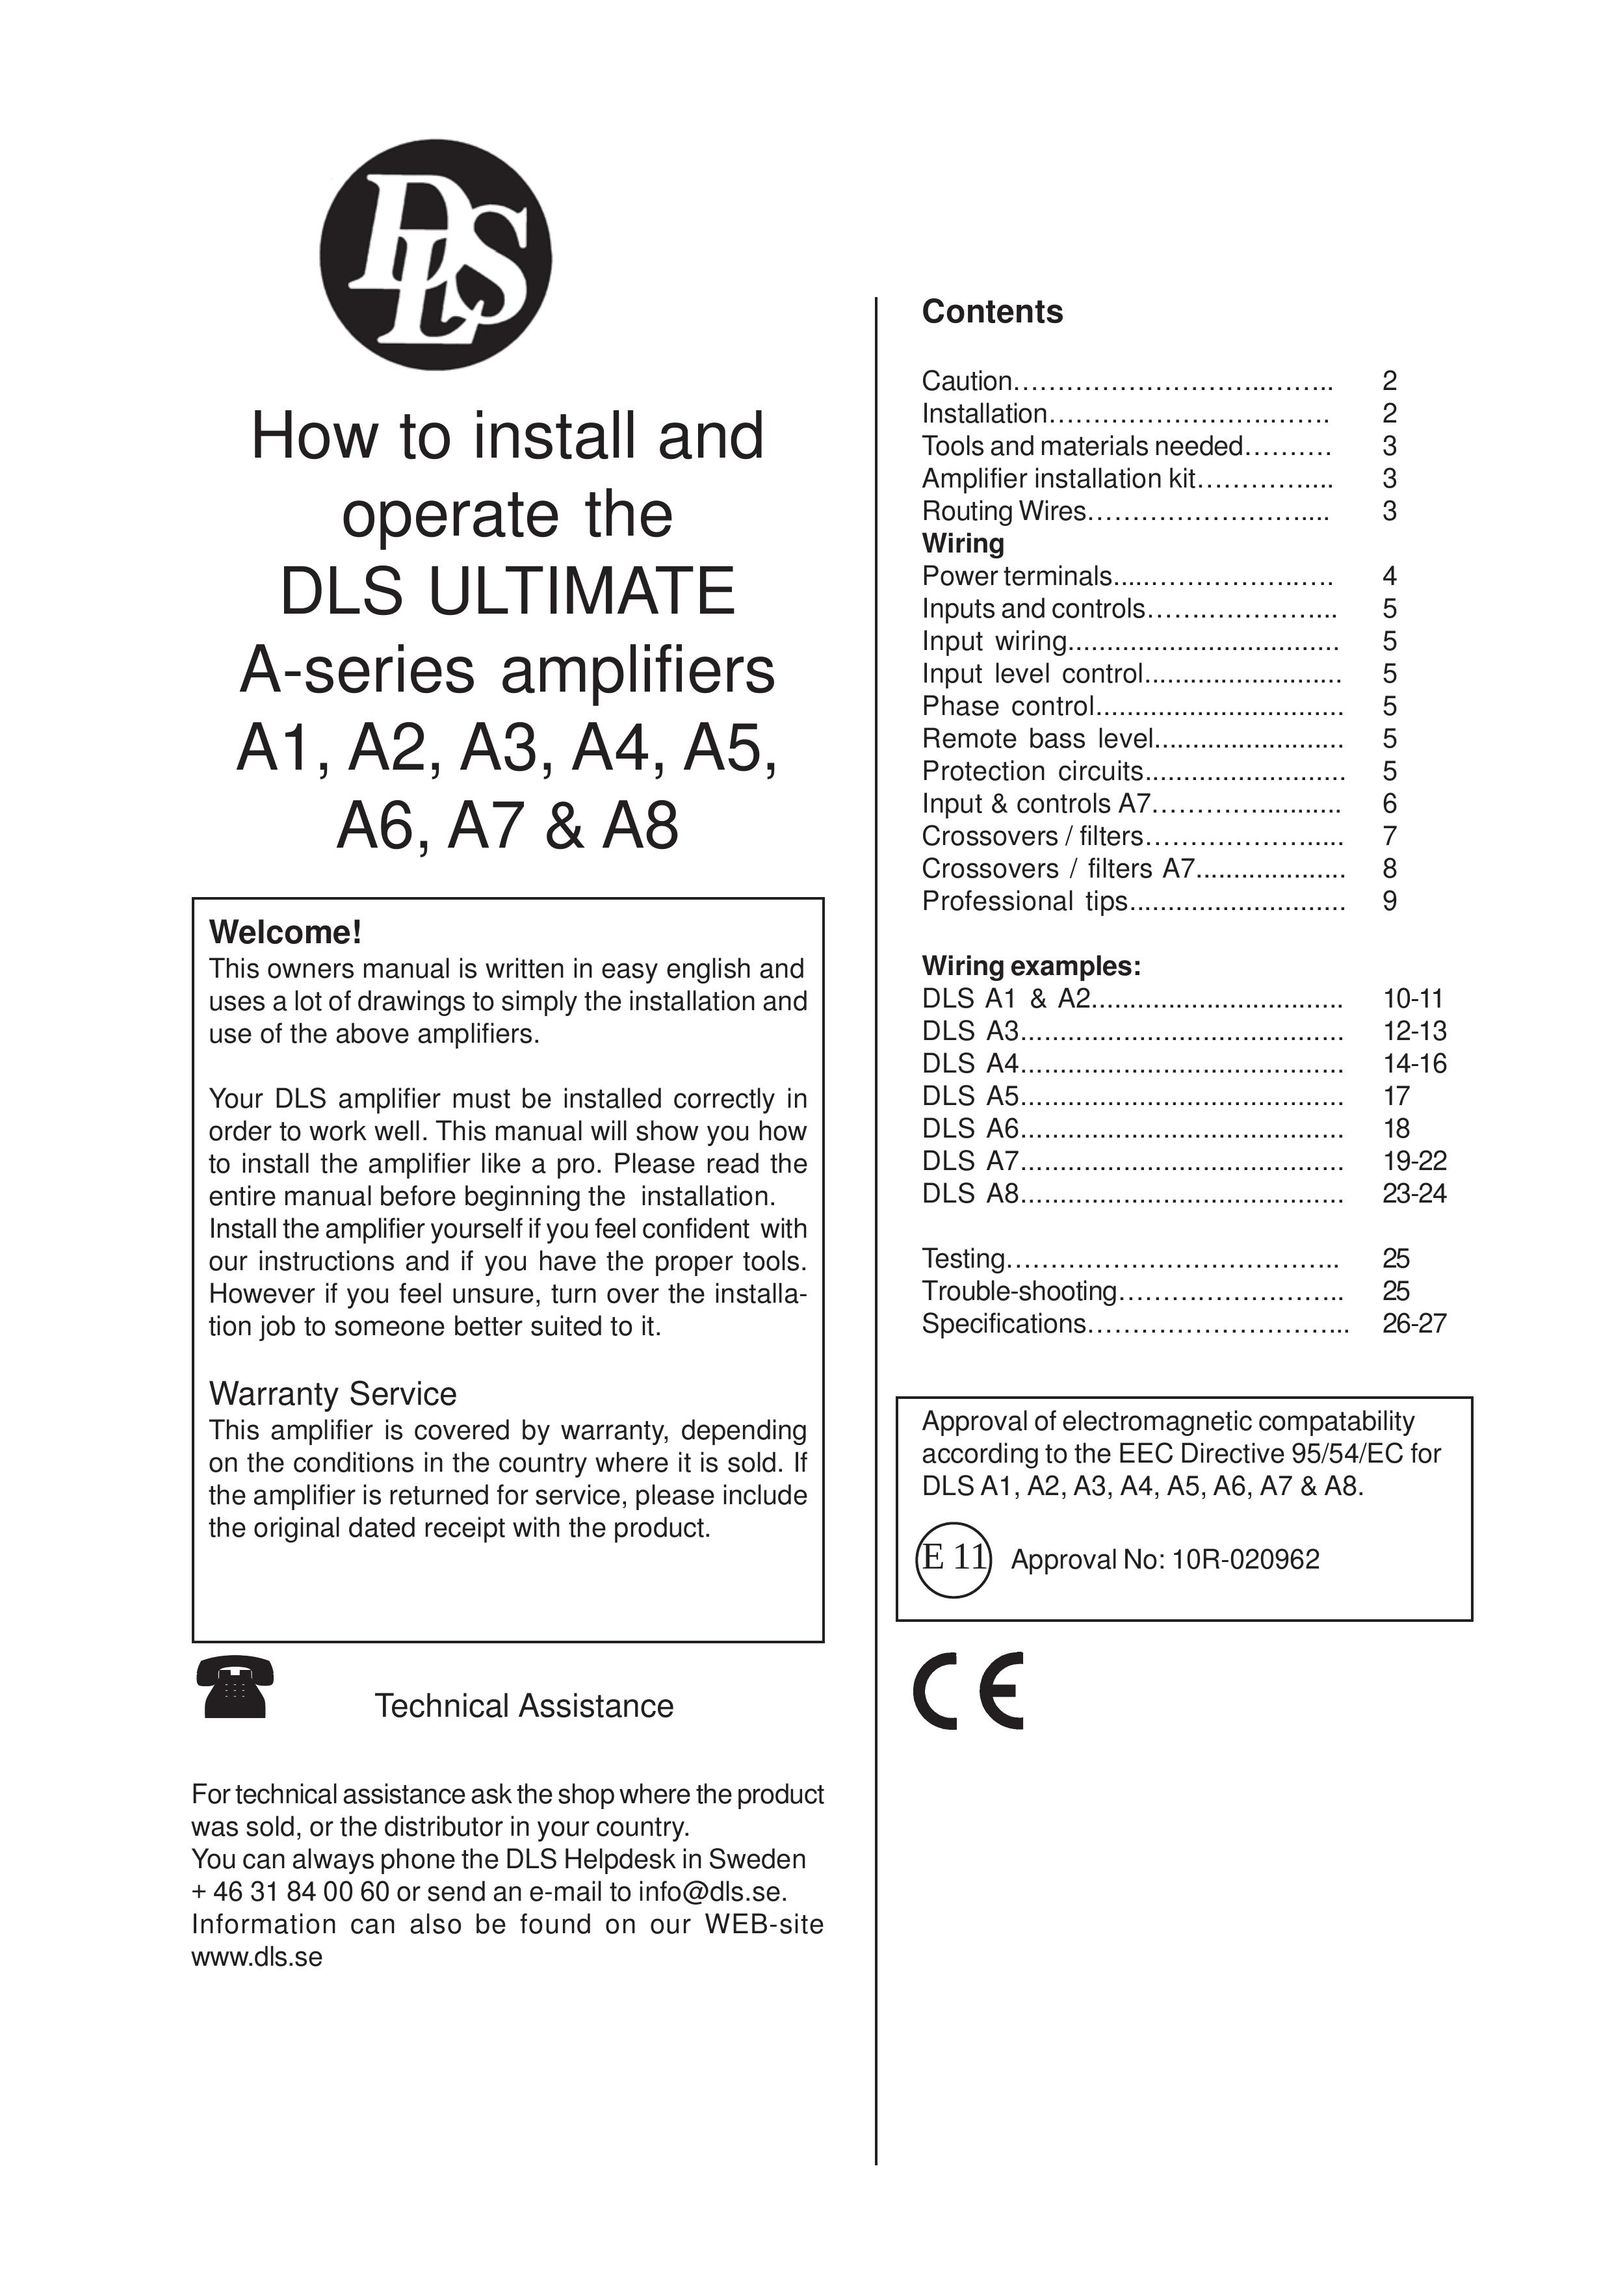 DLS Svenska AB A1 Stereo Amplifier User Manual